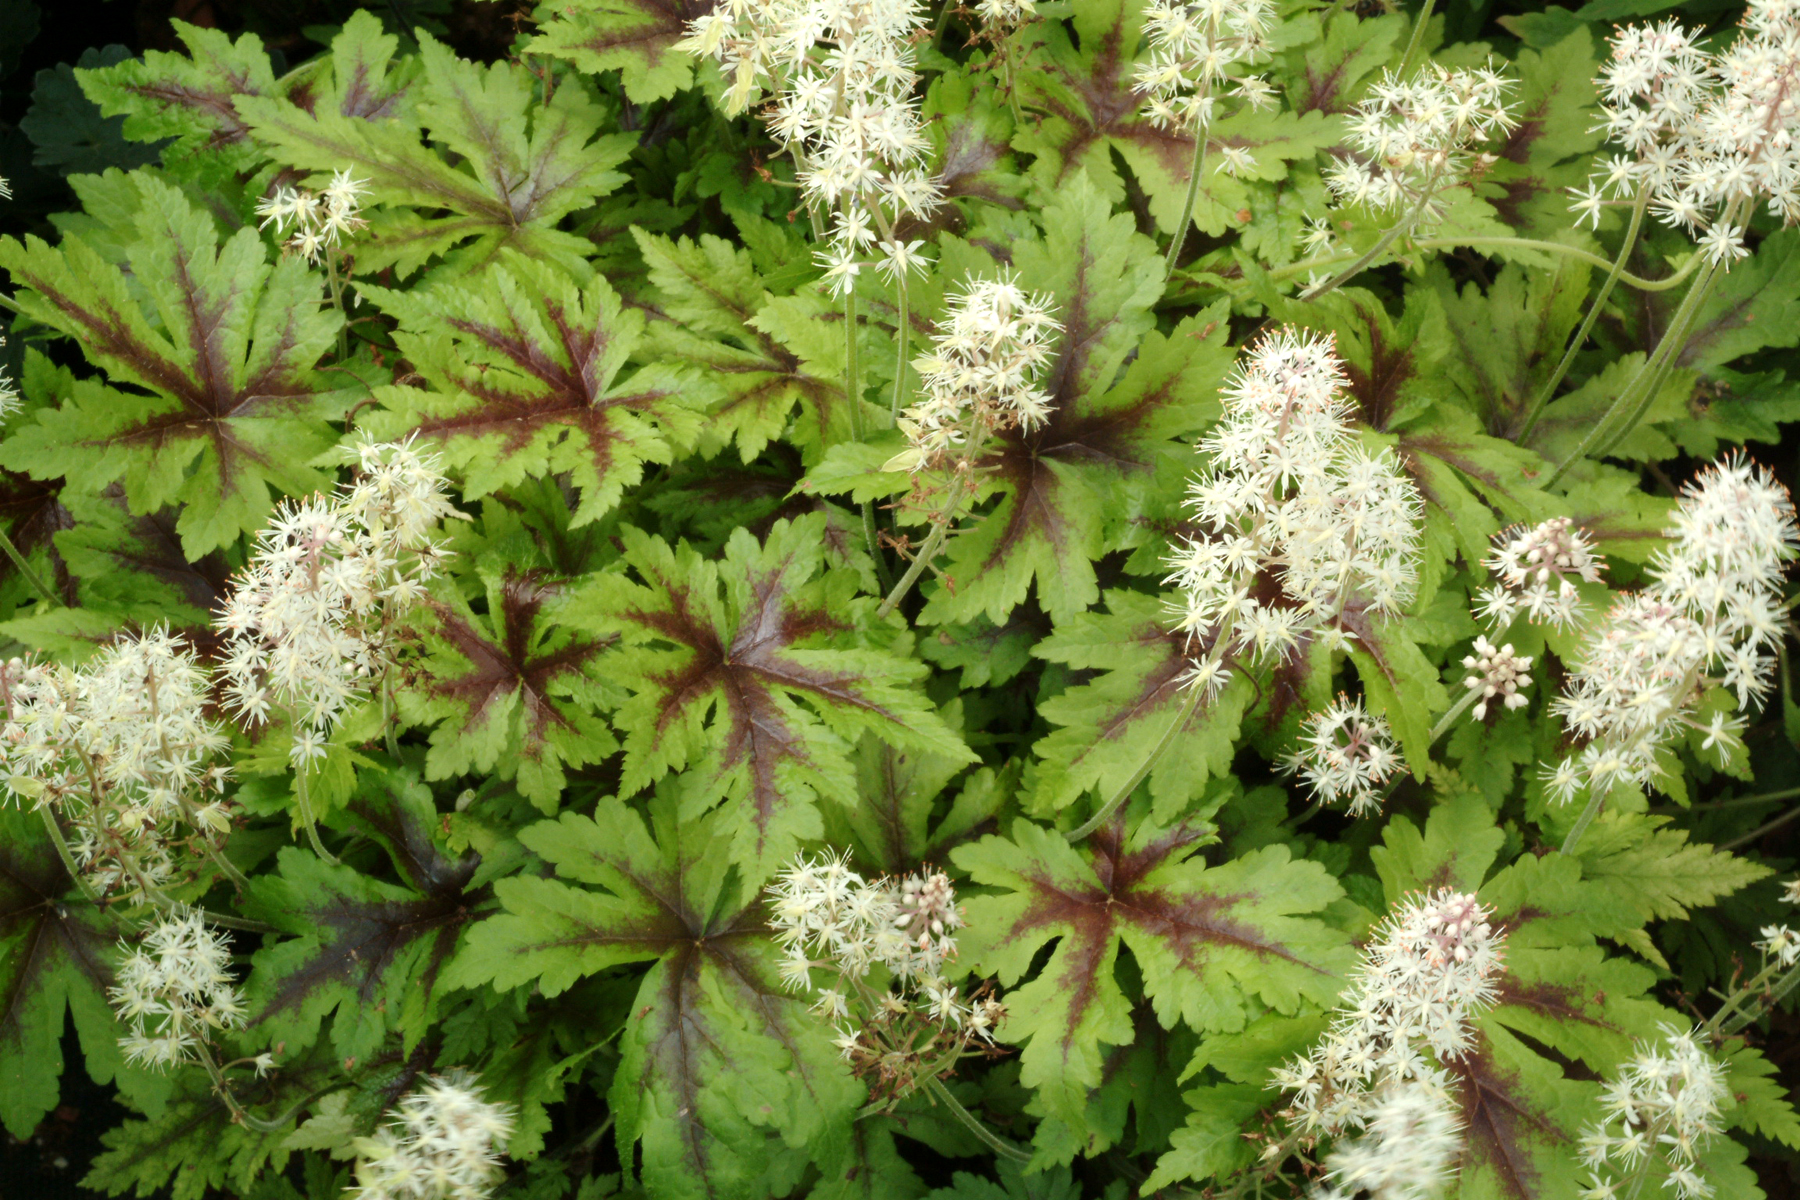 A cultivar of foamflower with streaks of red in the green leaves